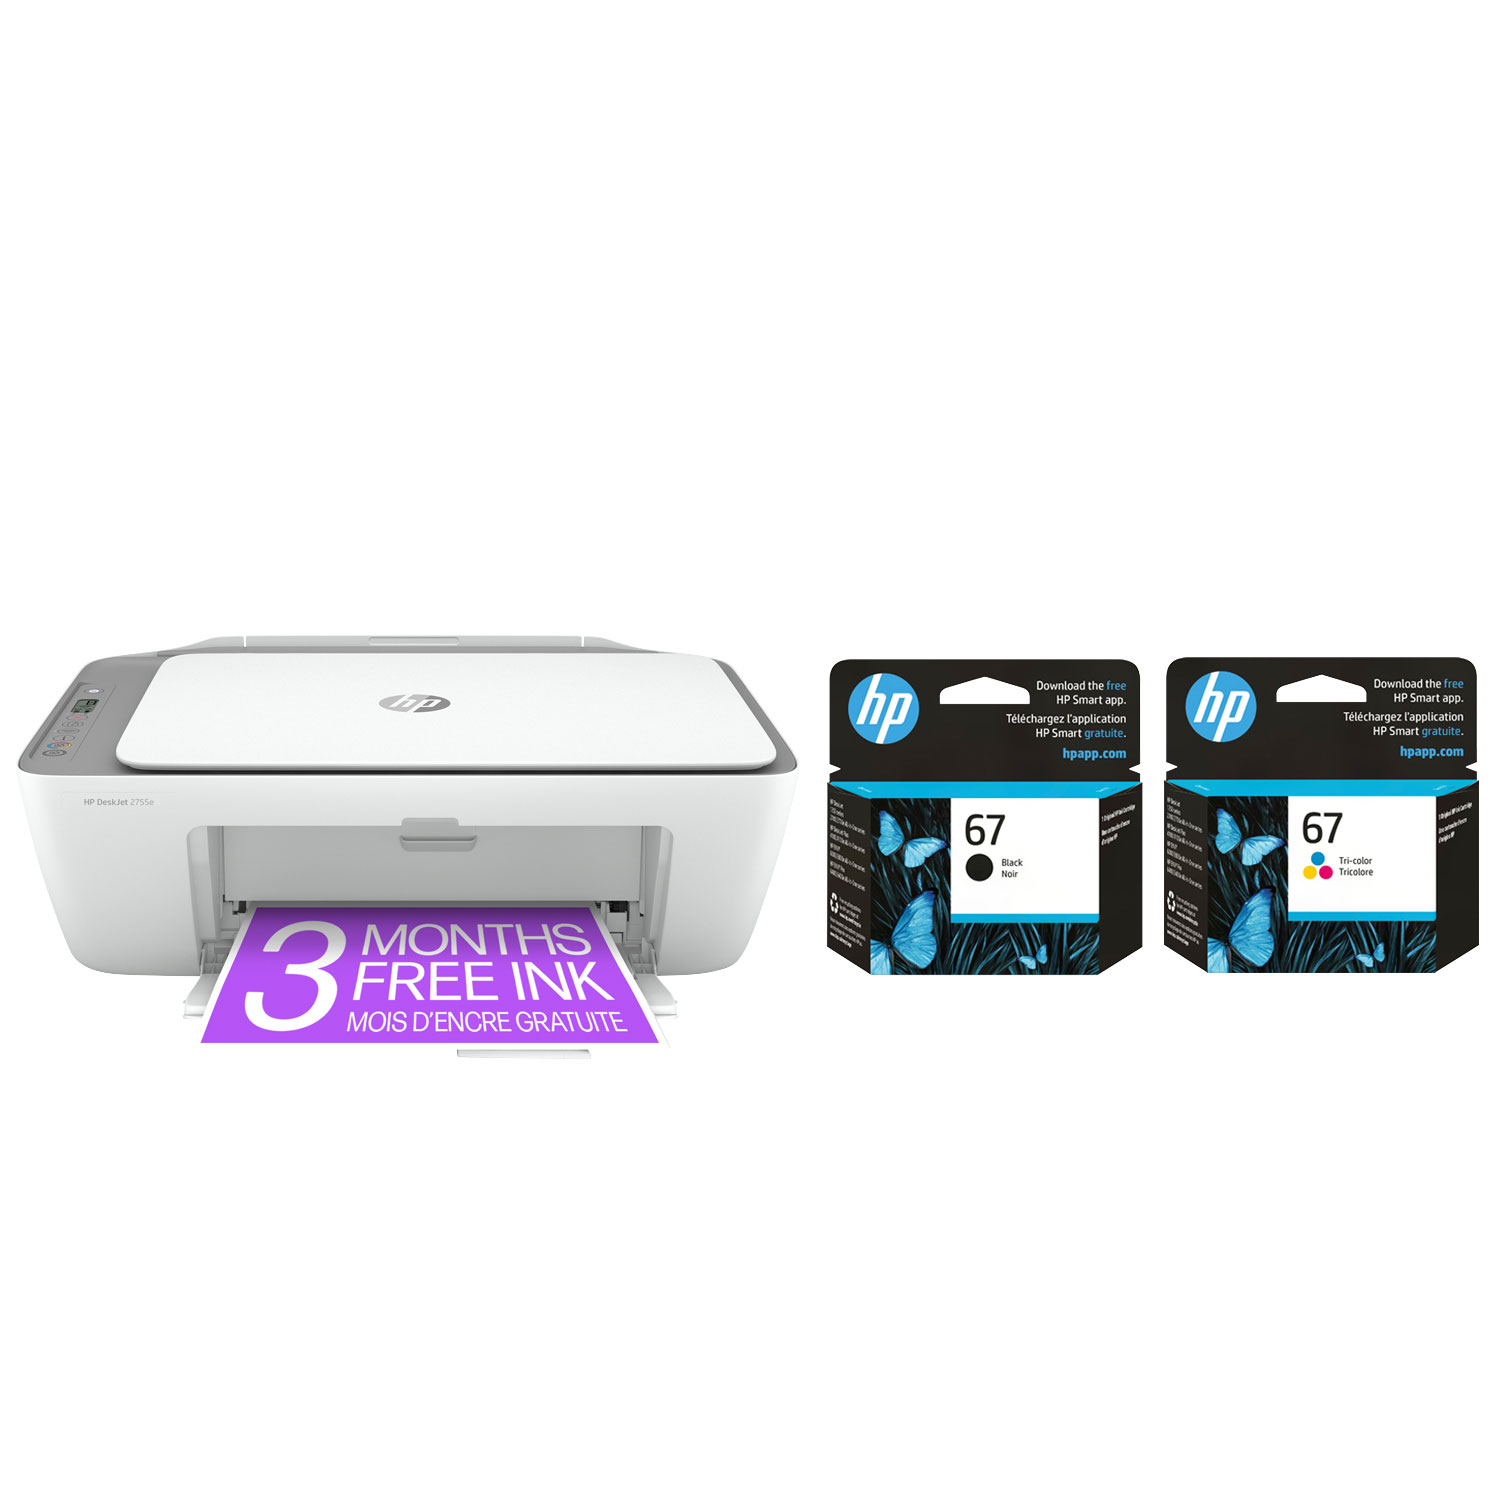 HP DeskJet 2755e Wireless All-In-One Inkjet Printer with HP 67 Black & Tri-Colour Ink